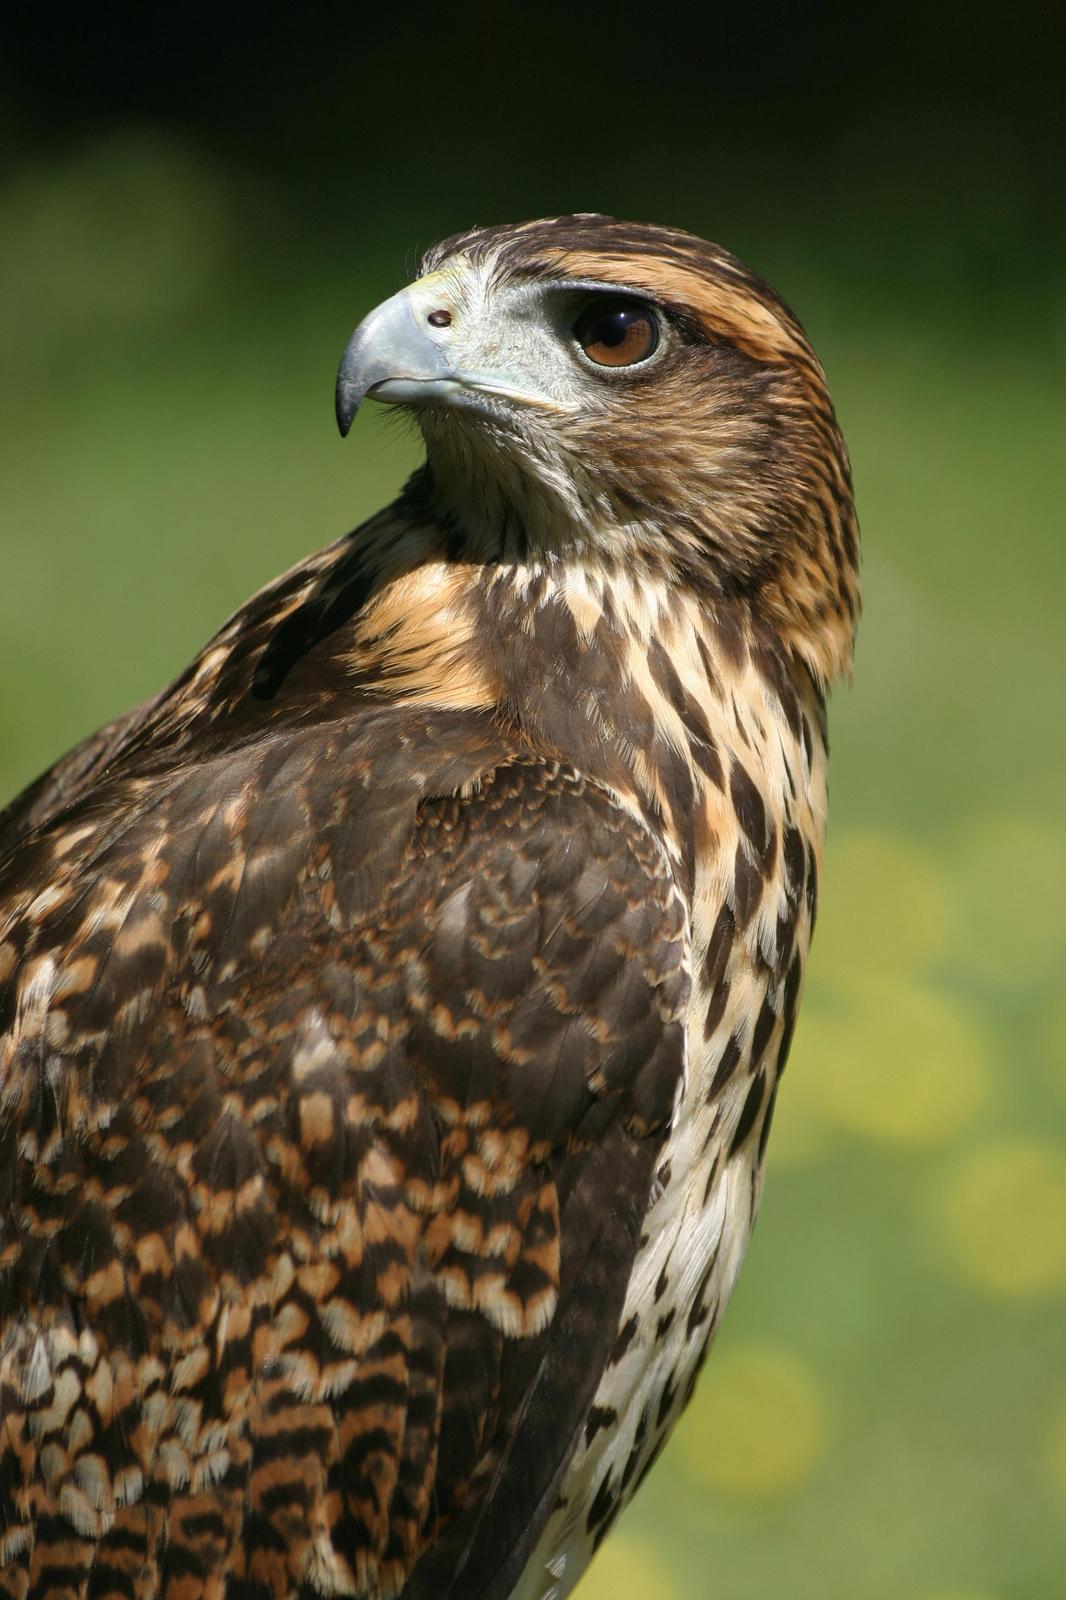 Harris's Hawk Photo by Ignacio Azocar